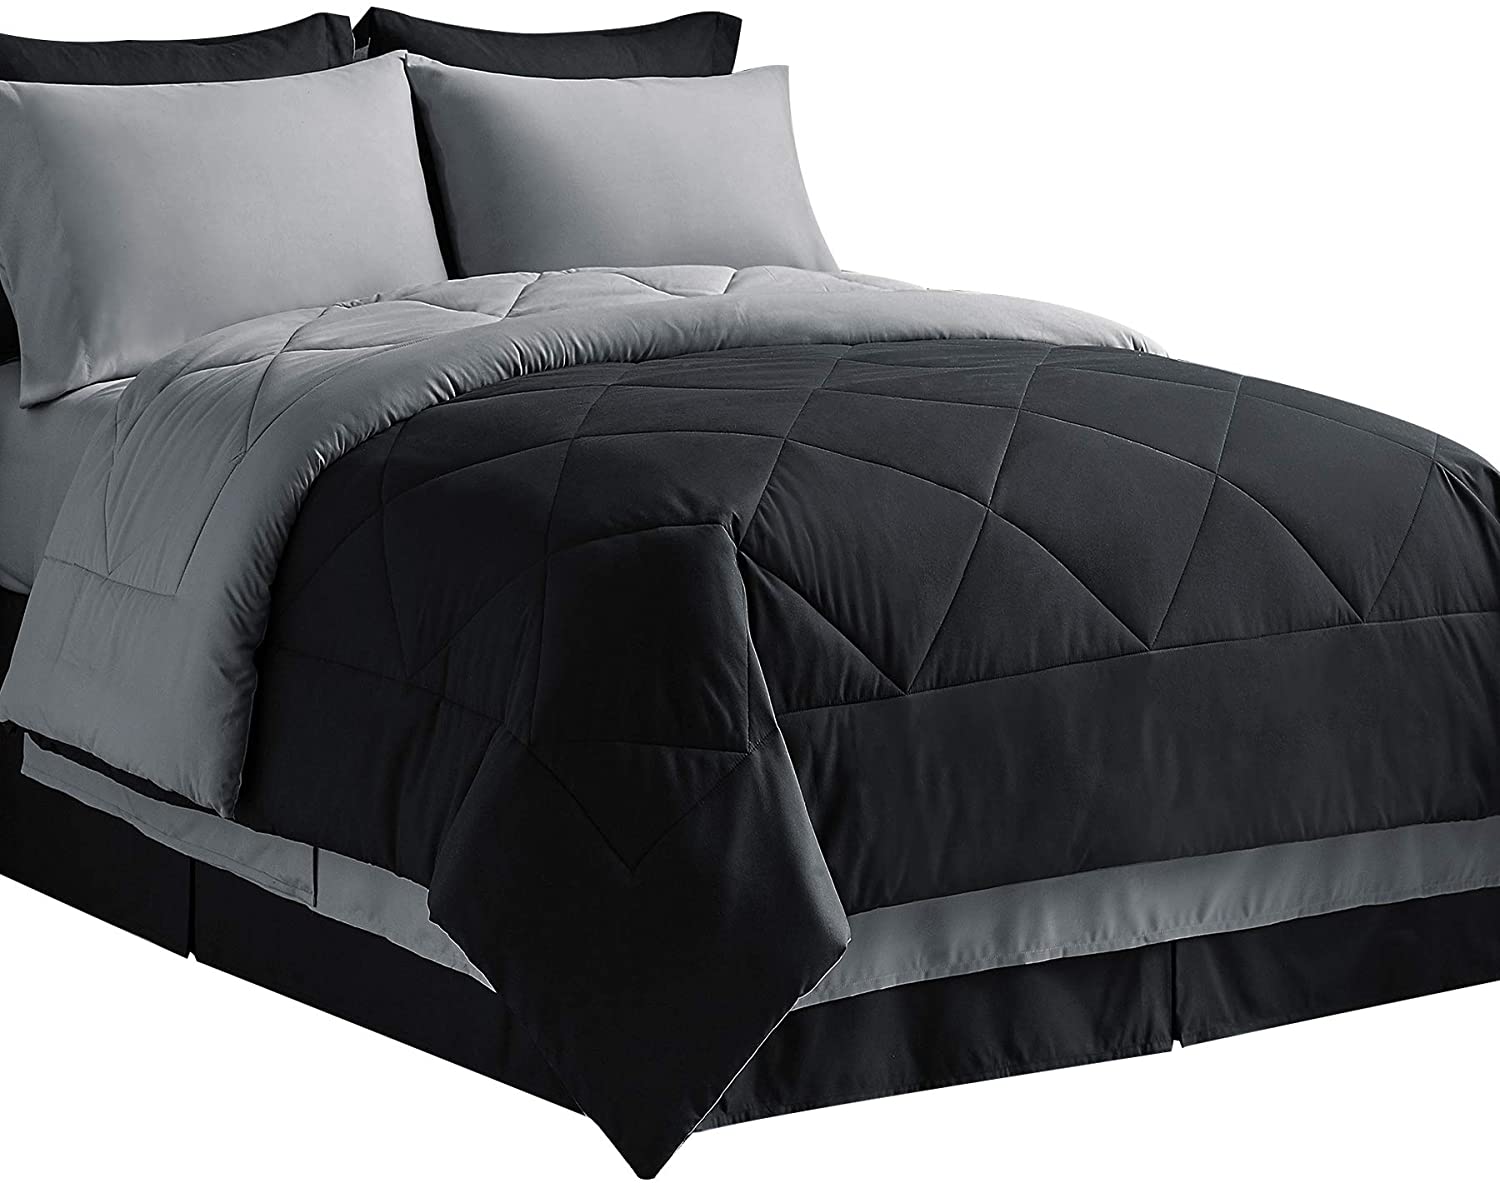 Bedsure Bed In A Bag Comforter Sets, King Bed In A Bag Comforter Sets